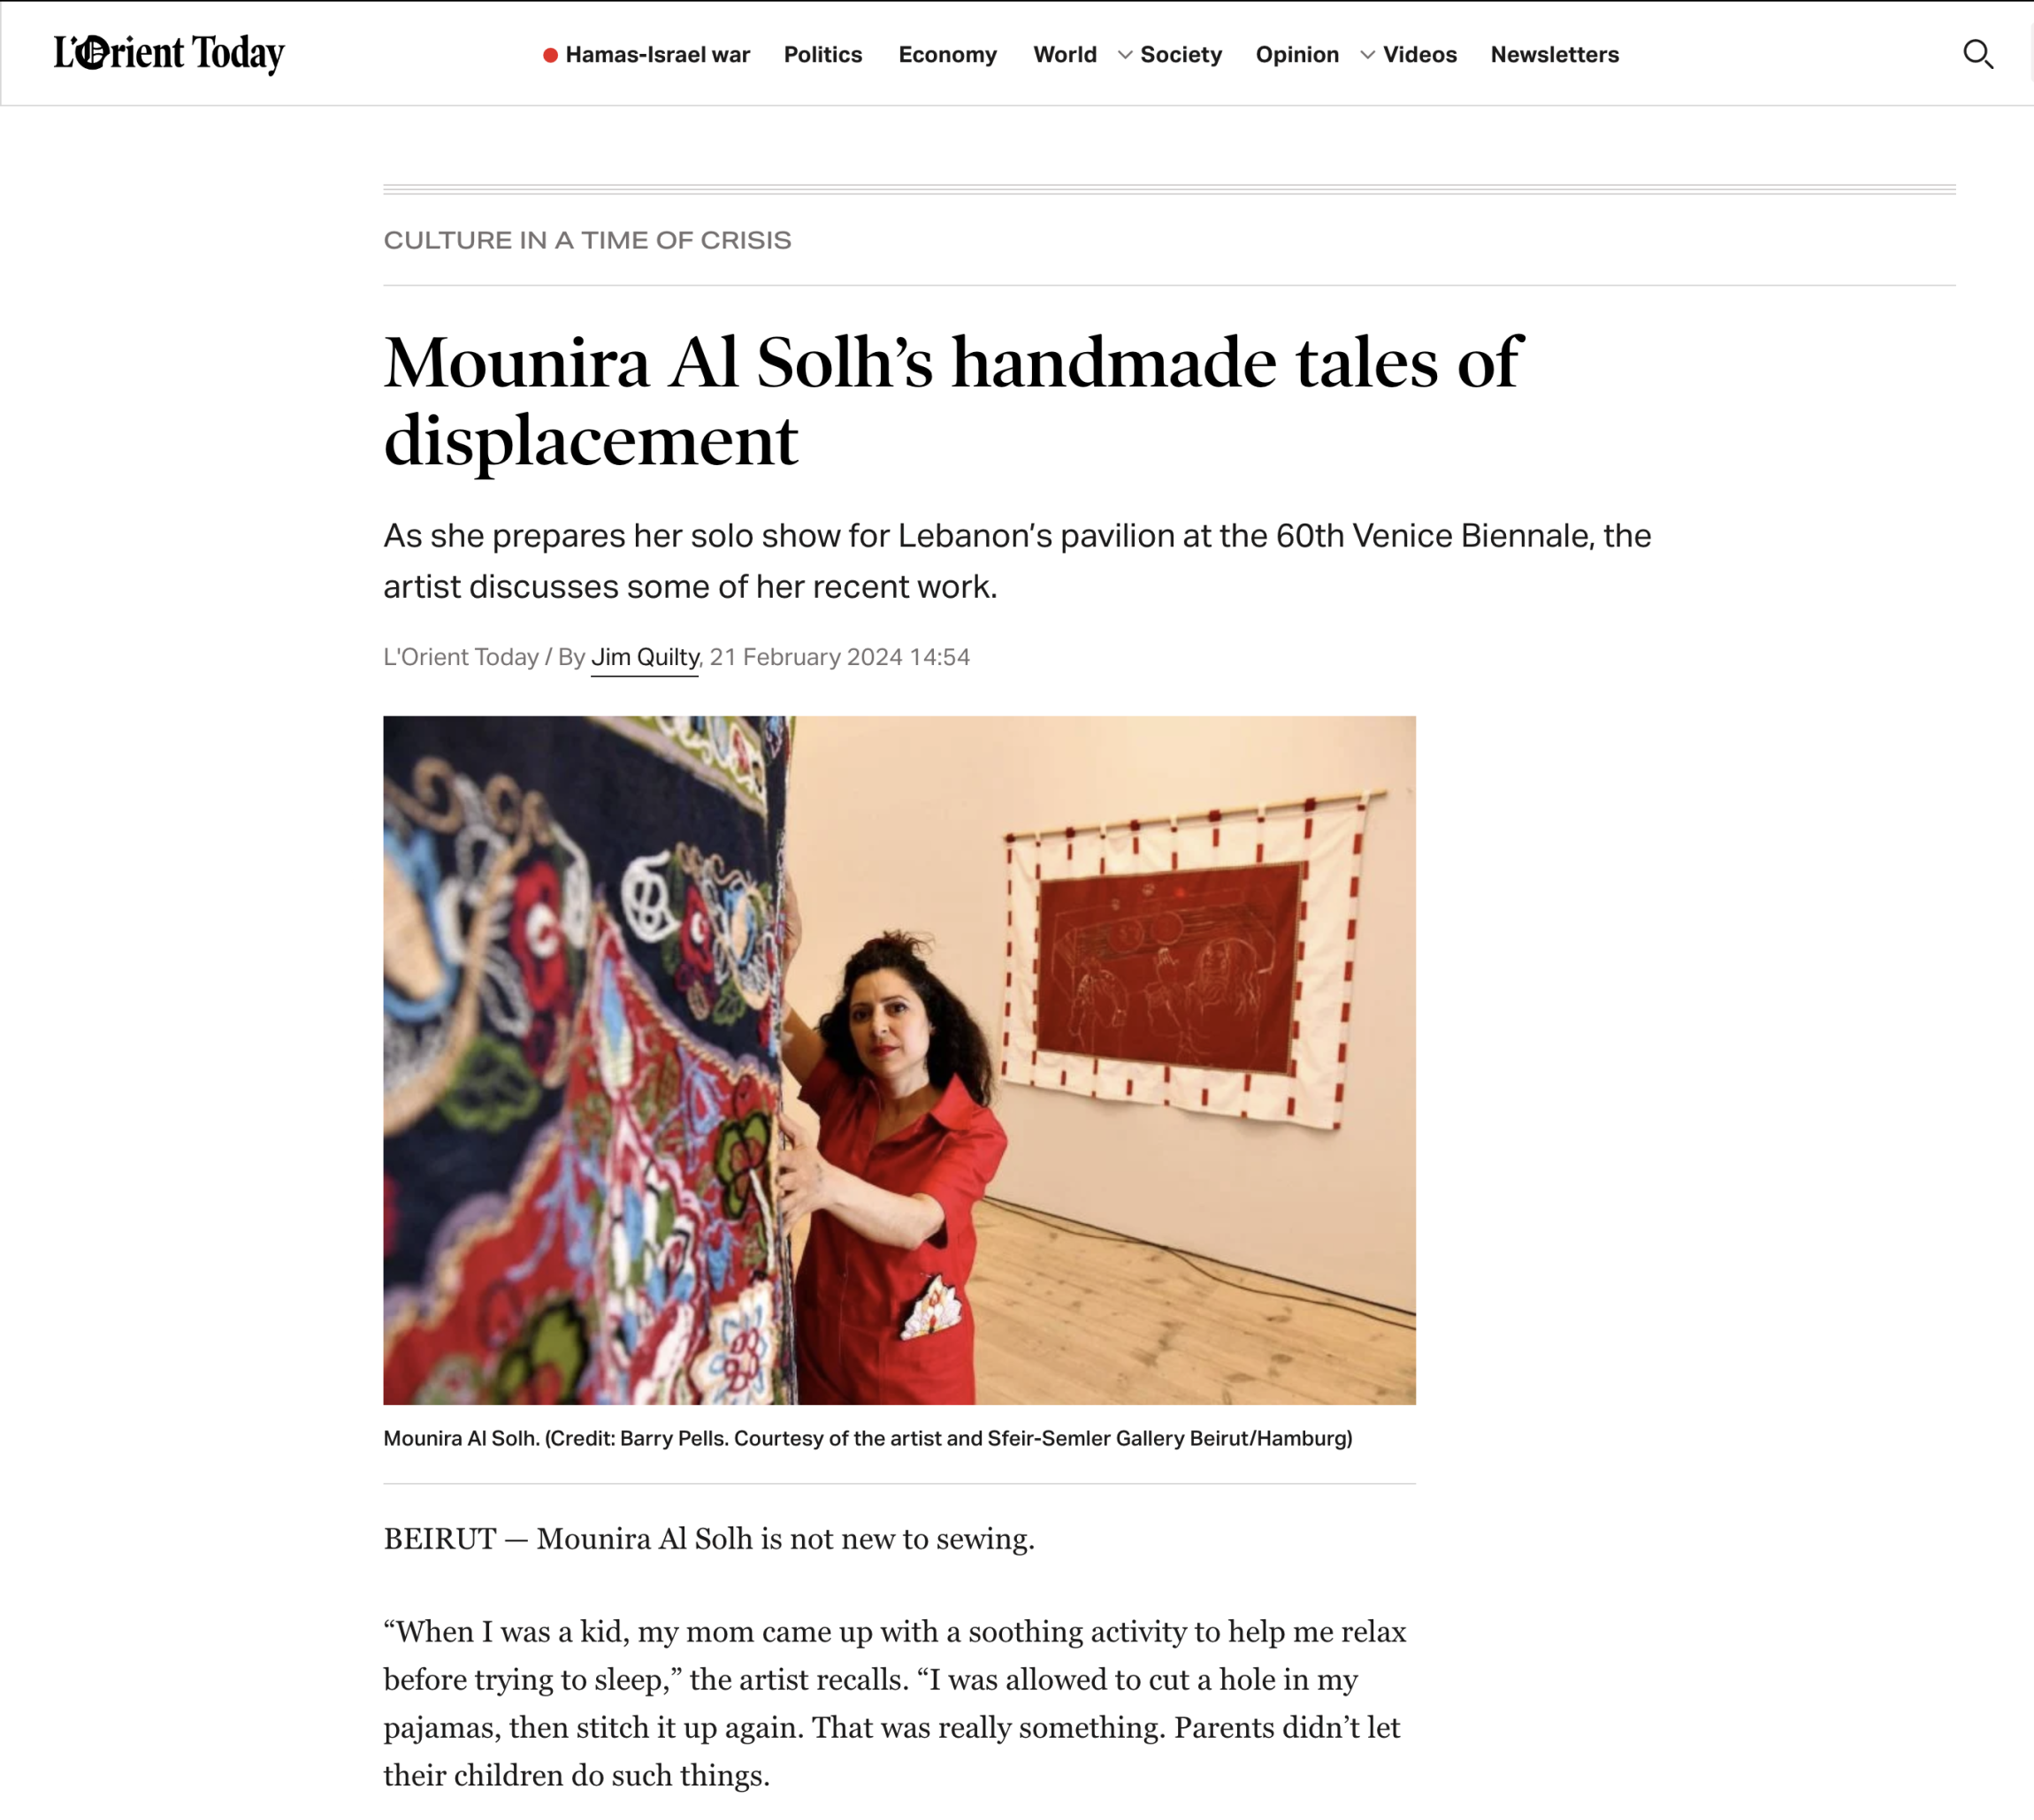 Mounira Al Solh « Mounira Al Solh’s handmade tales of displacement » | via L'Orient Today, February 21, 2024